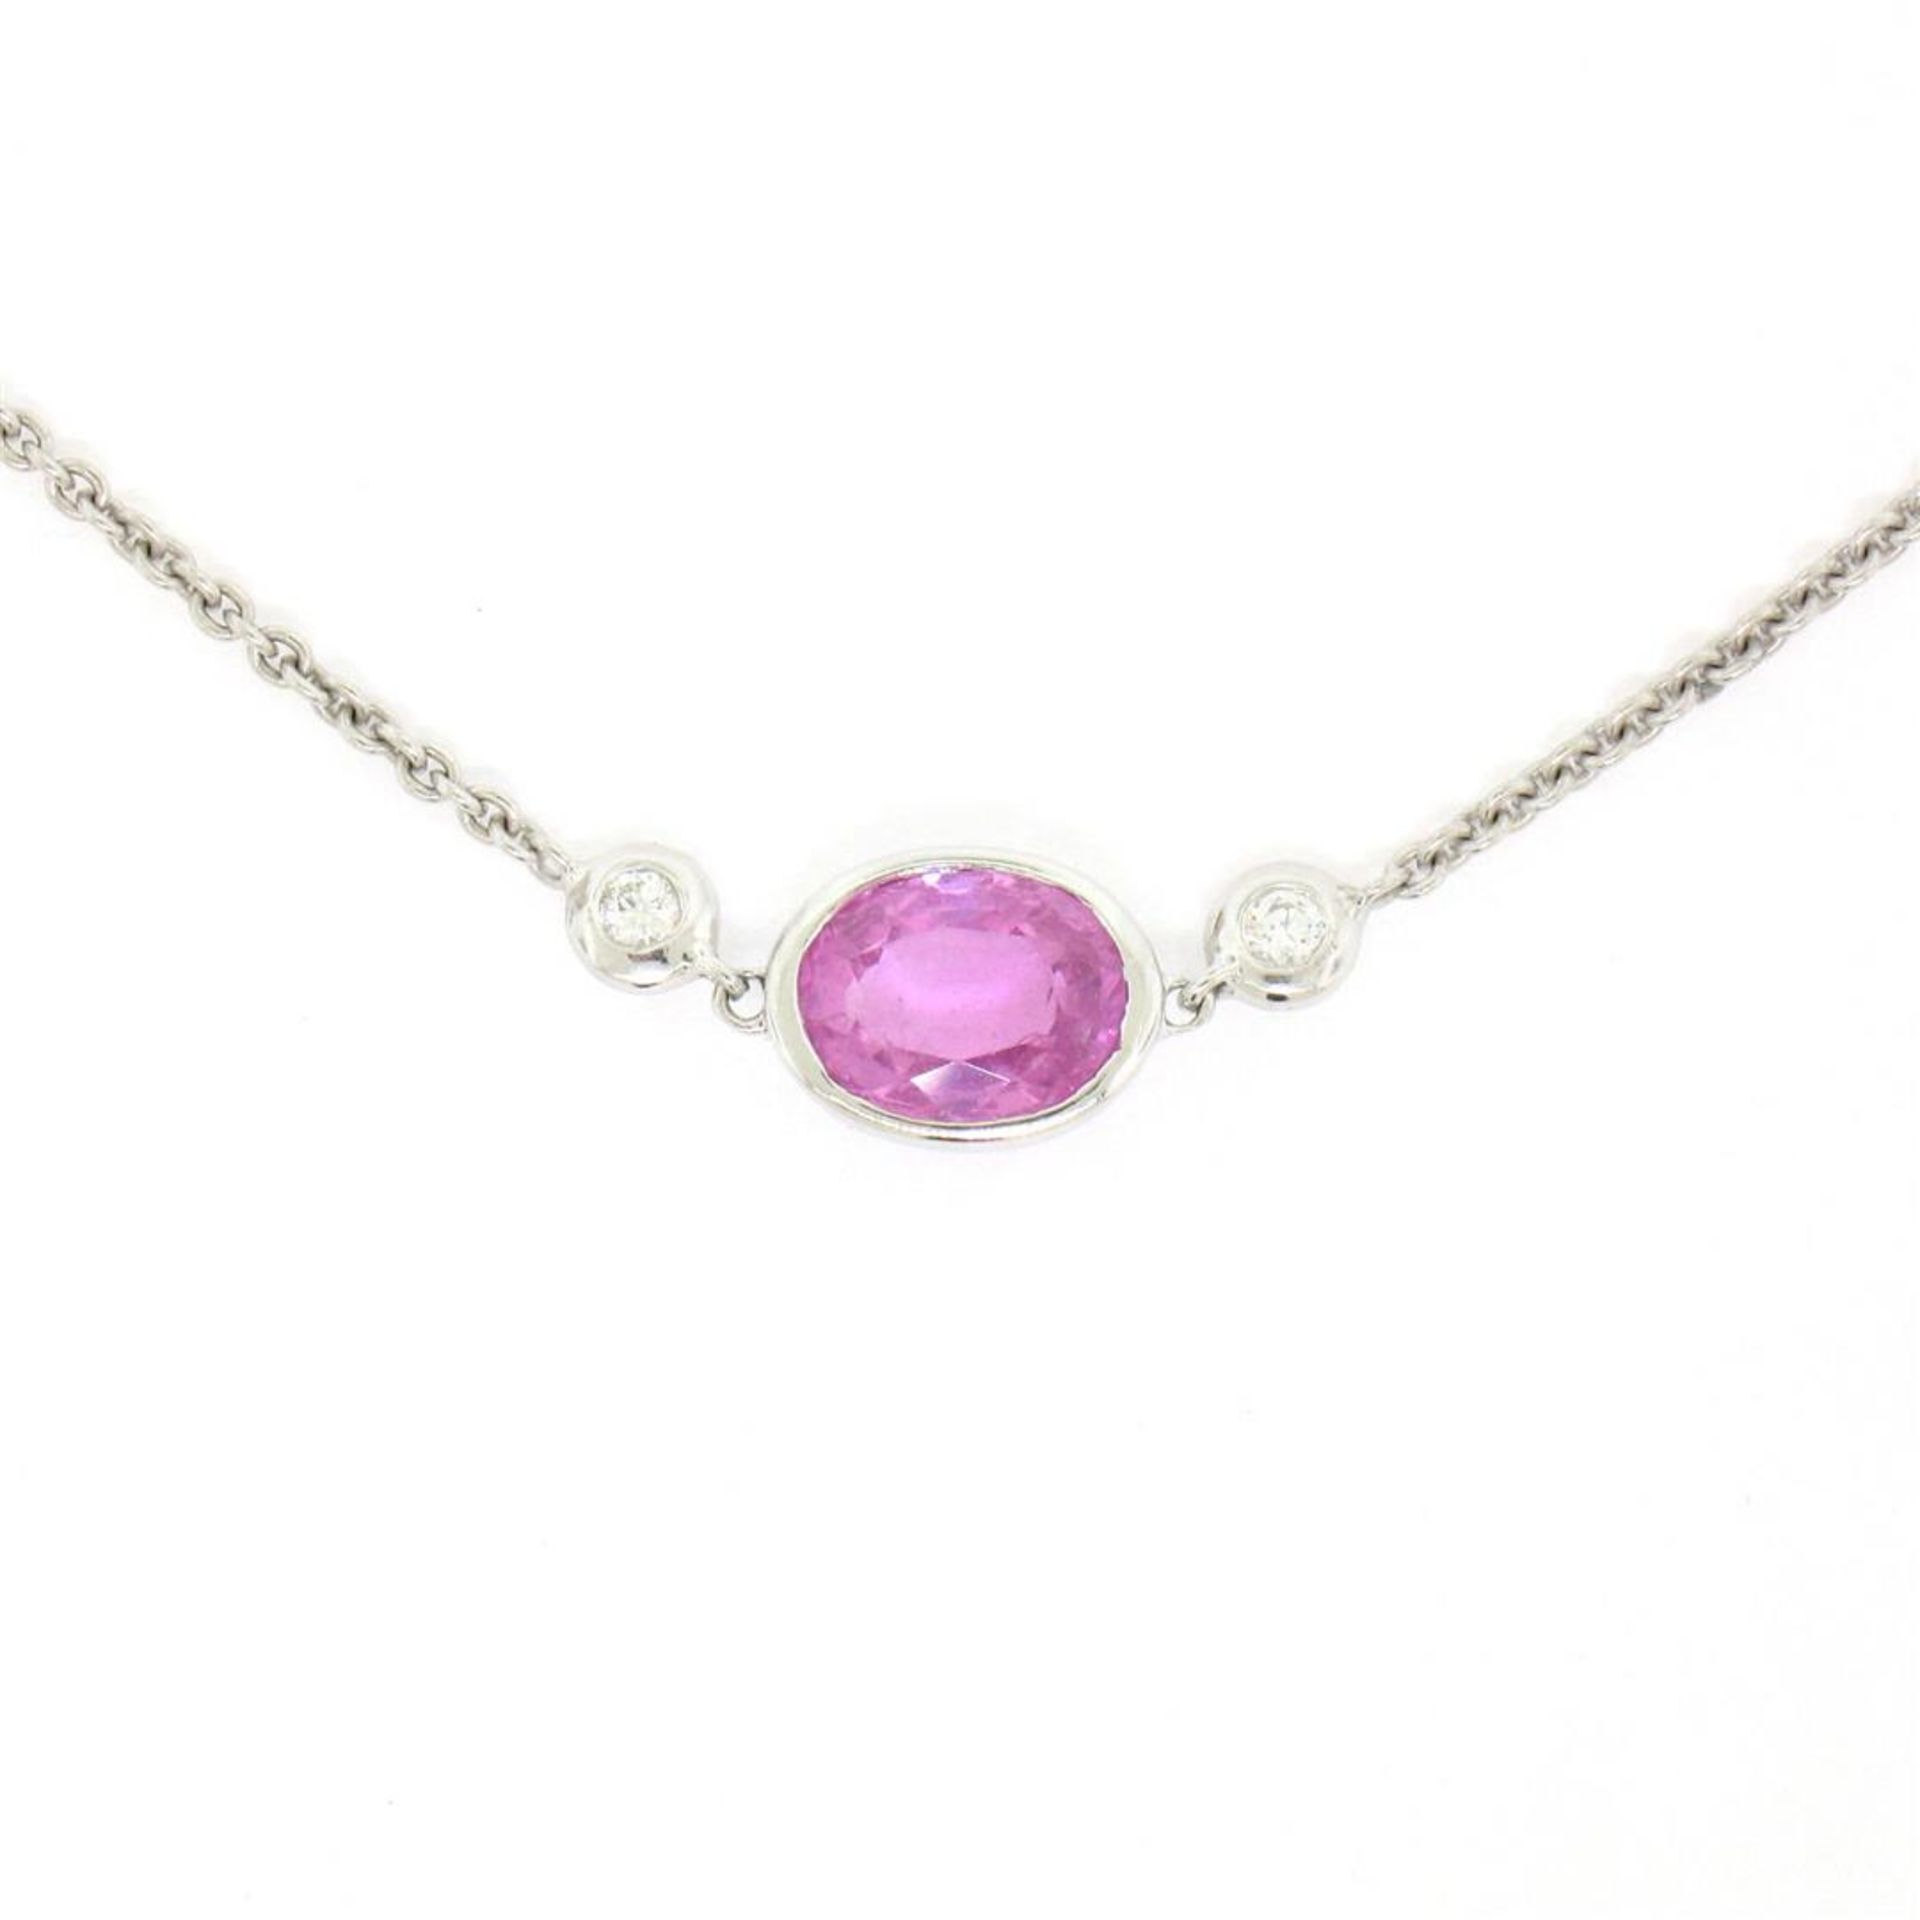 18K White Gold 16" 1.37 ctw GIA Pink Sapphire & Diamond Pendant Necklace